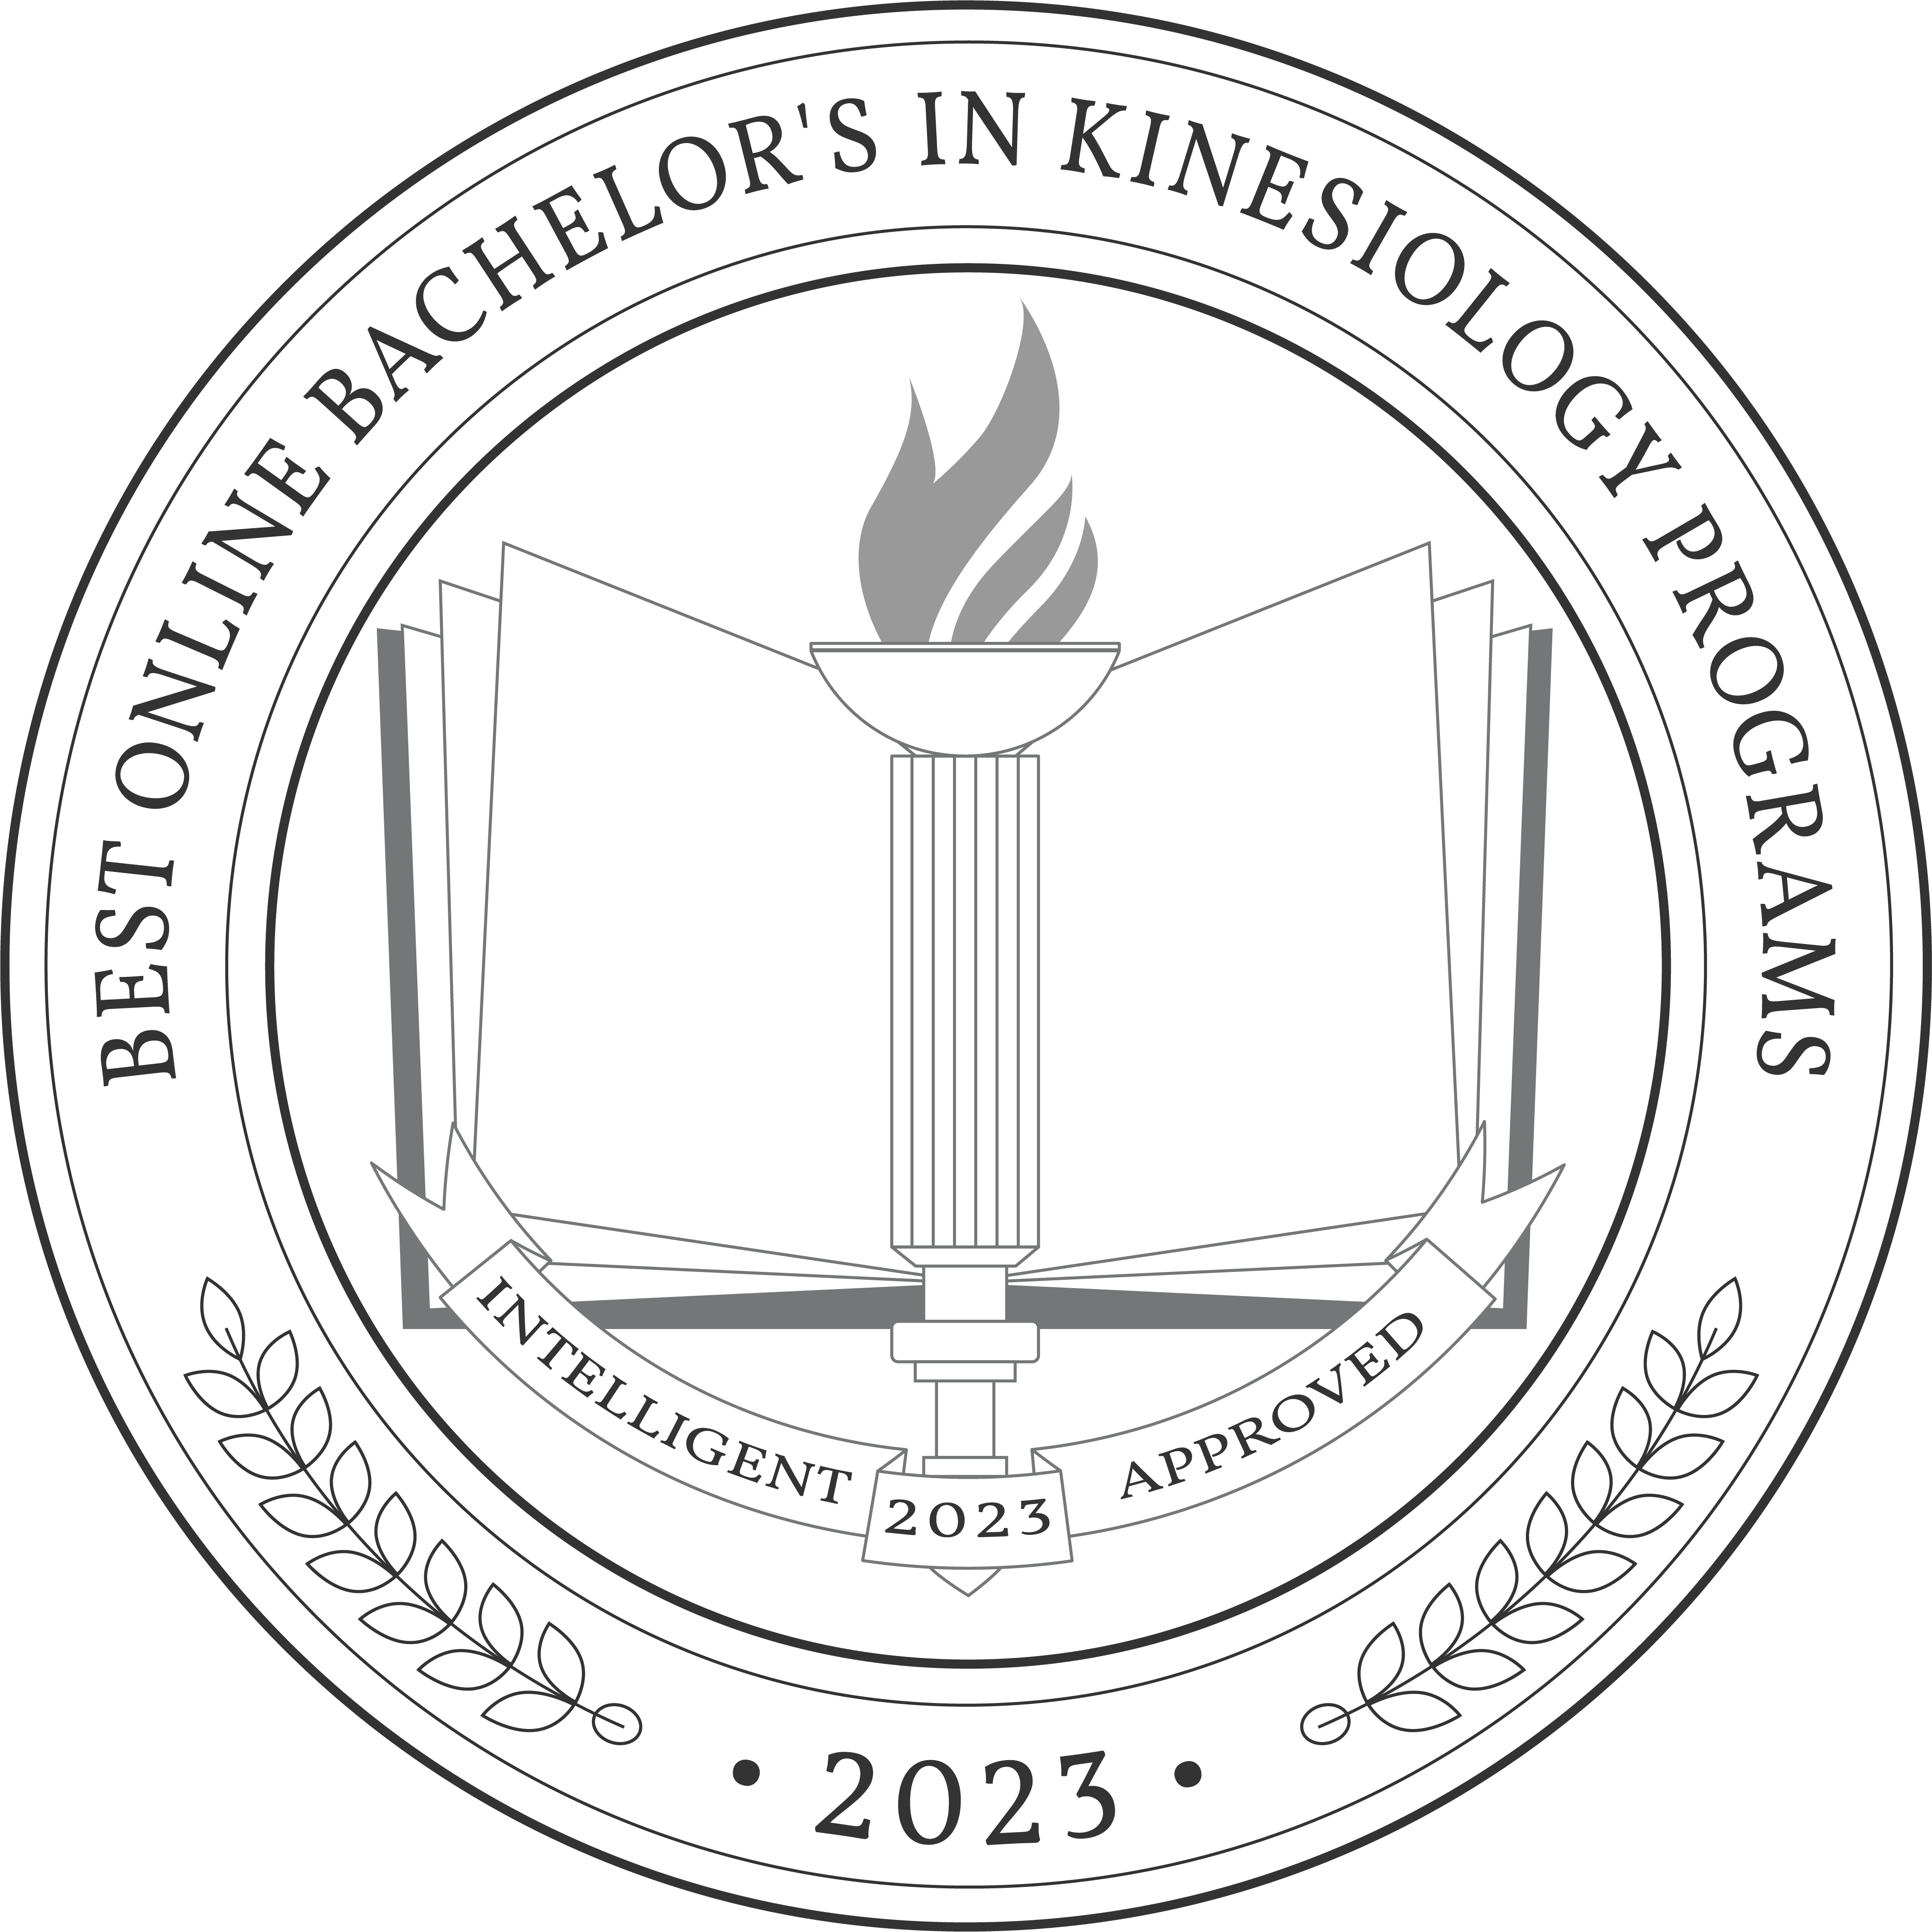 Best Online Bachelor's in Kinesiology Programs badge